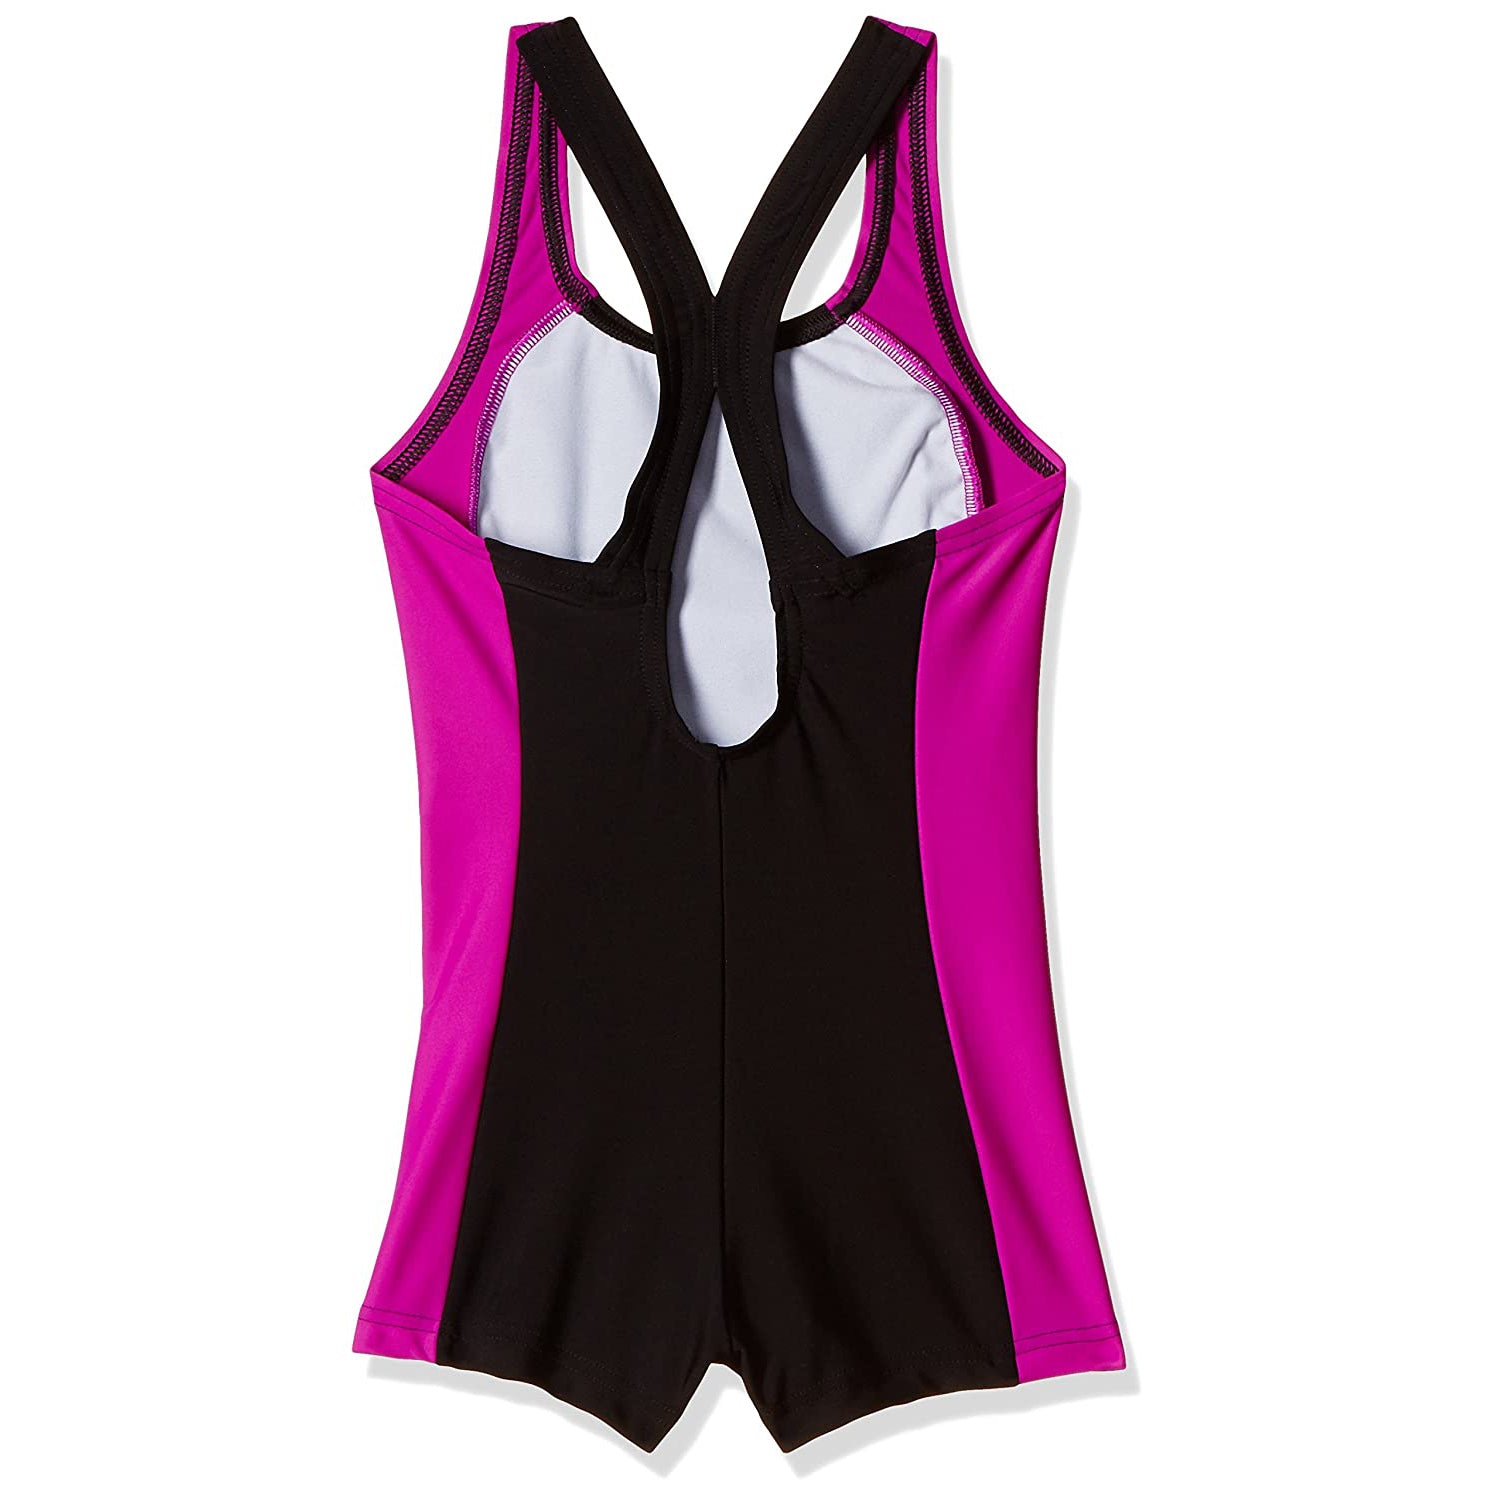 Speedo Girls Swimwear Cayla Legsuit (Black and Diva) - Best Price online Prokicksports.com